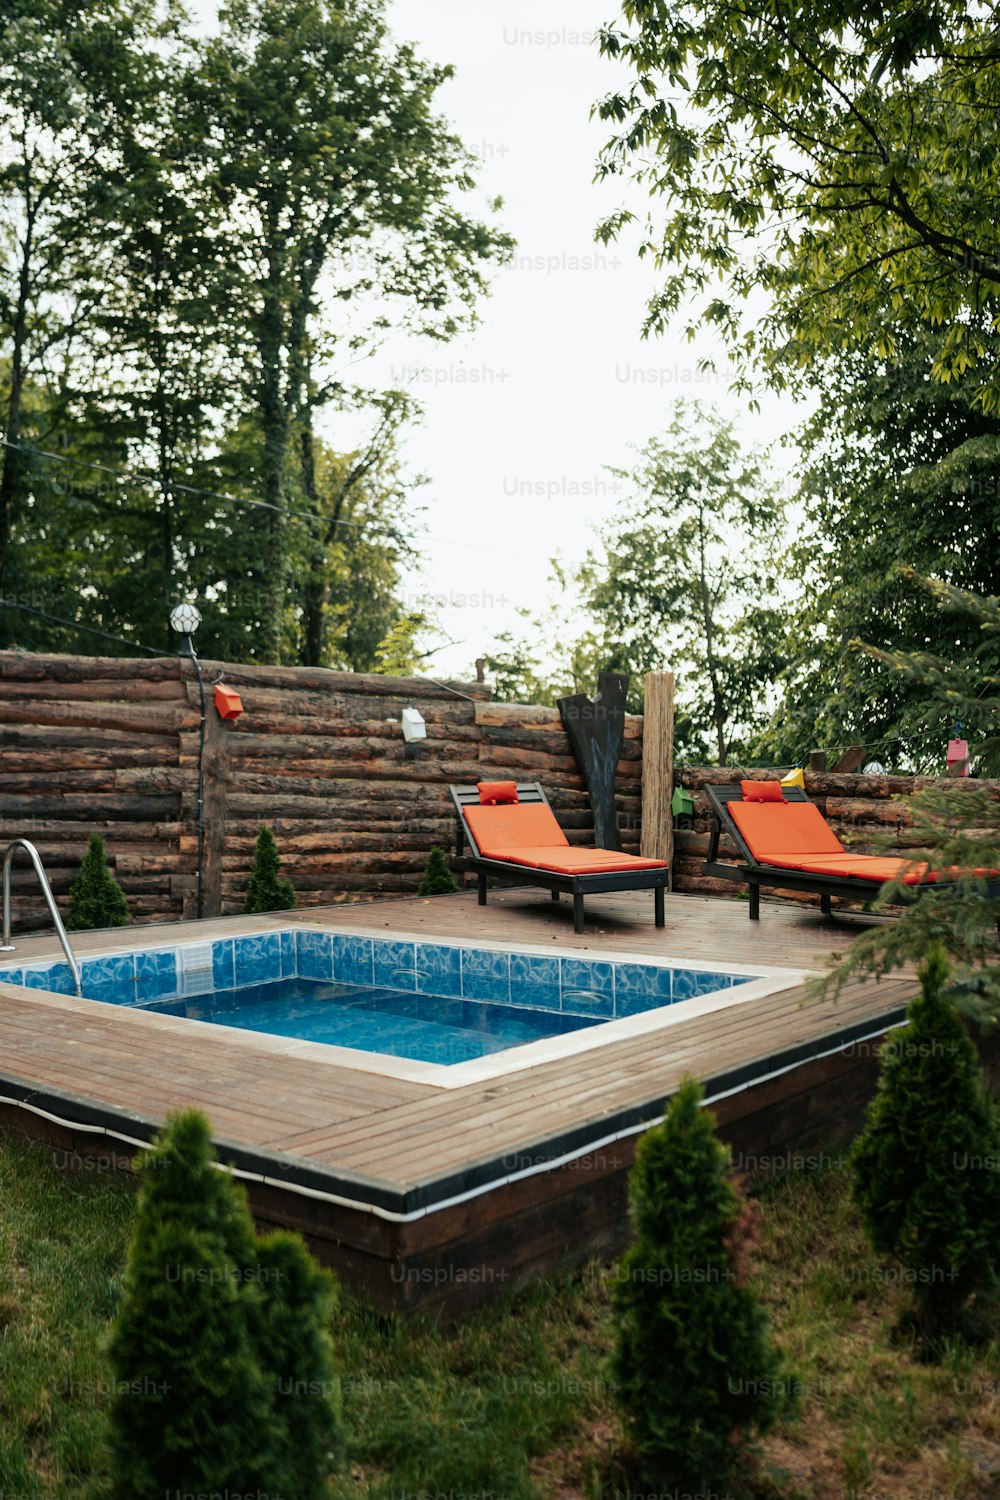 un cortile con piscina e sedie a sdraio